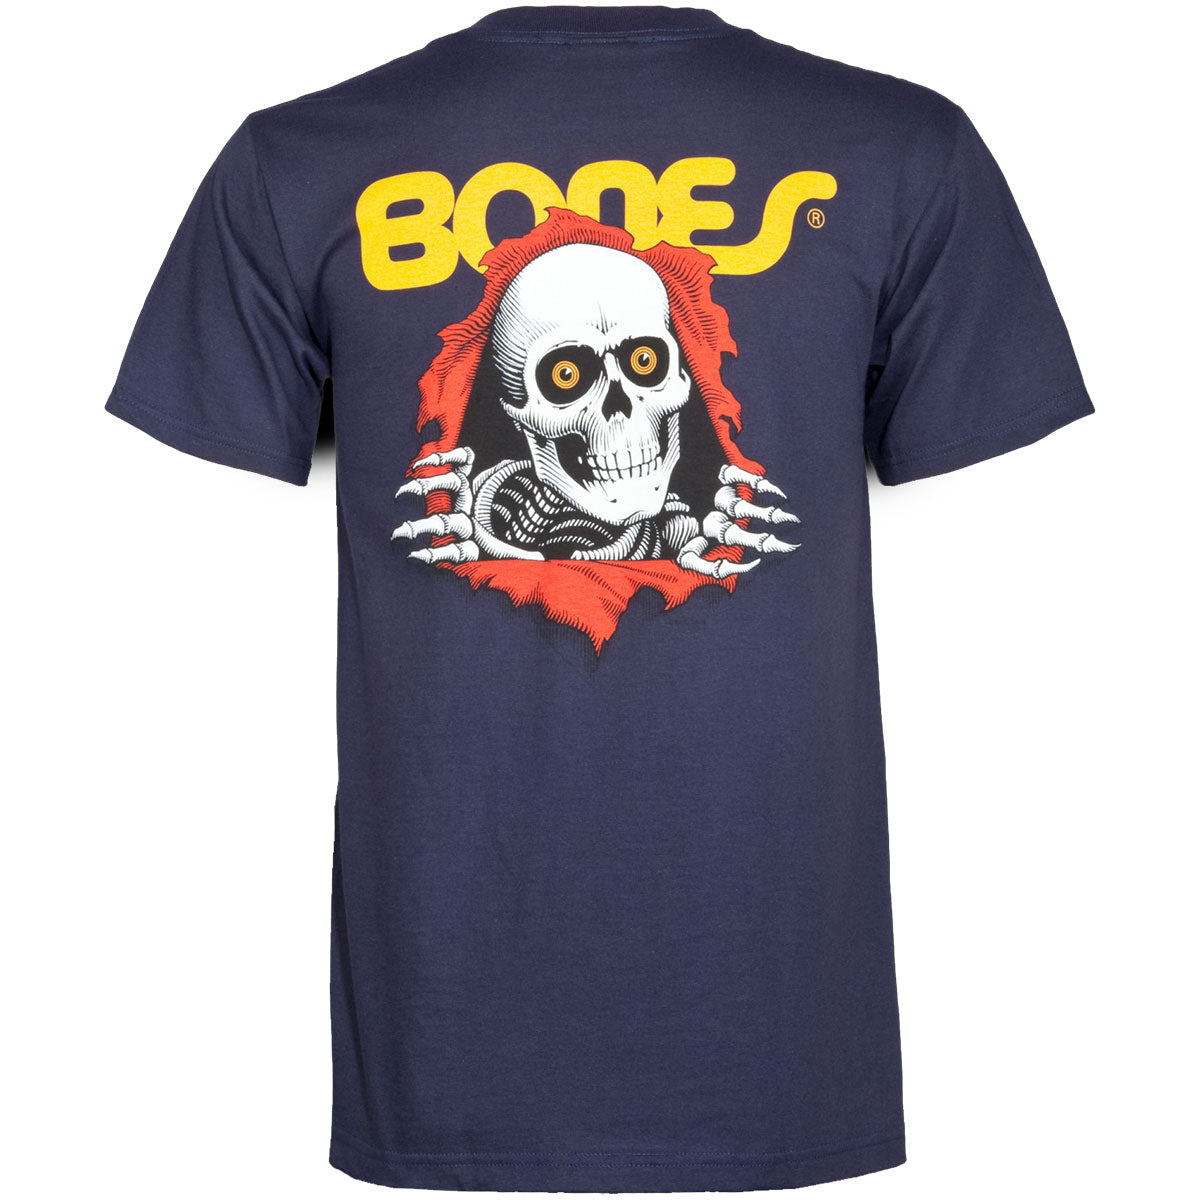 Powell-Peralta Ripper T-Shirt - Navy image 1